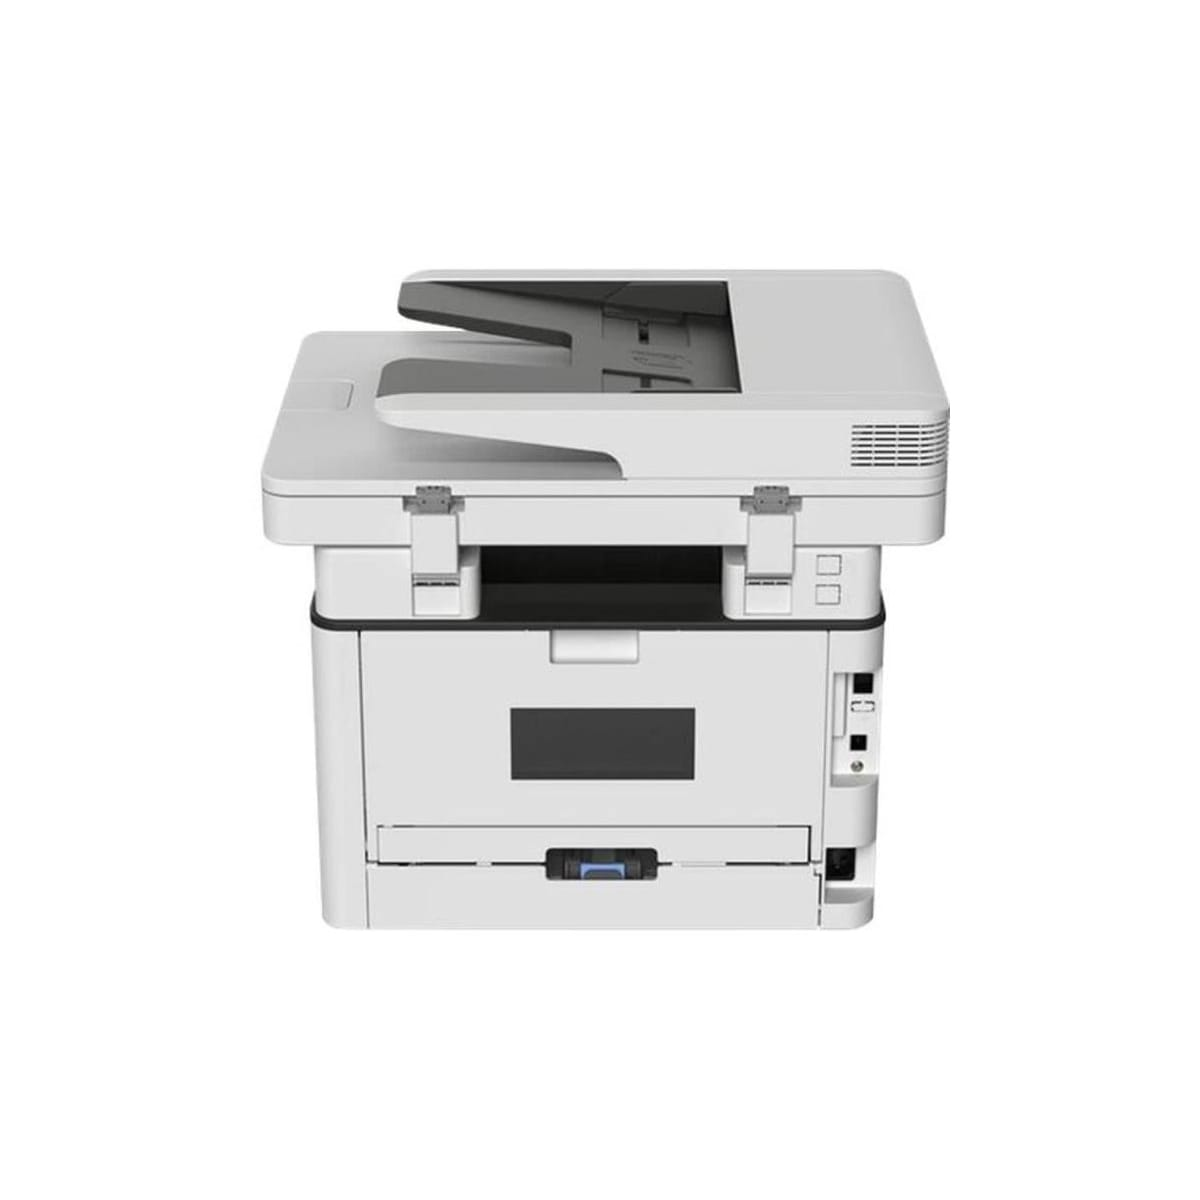 LEXMARK MB2236i Laser-Multifunktionsdrucker (A4, Drucker Scanner, Drucker, Multifunktionsgeräte s/w Laser und 4-in-1, ADF, Cloud-Fax, Kopierer